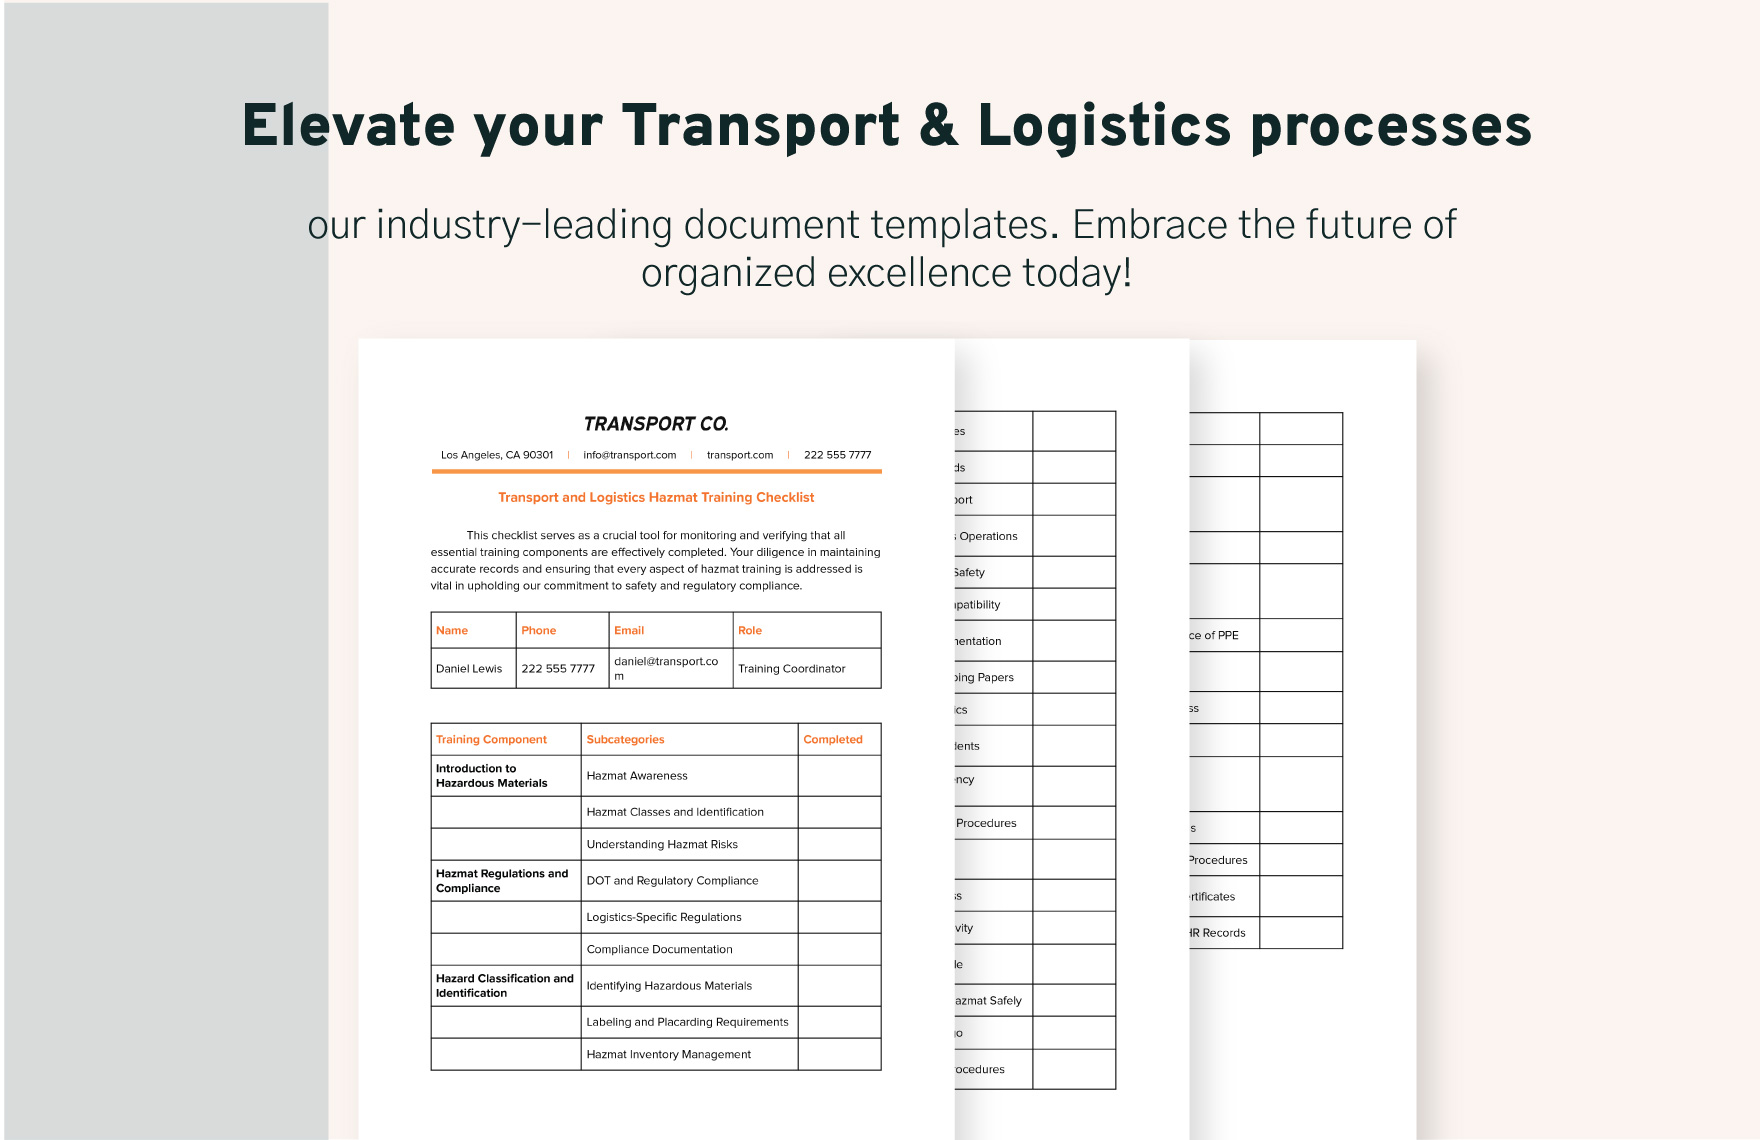 Transport and Logistics Hazmat Training Checklist Template